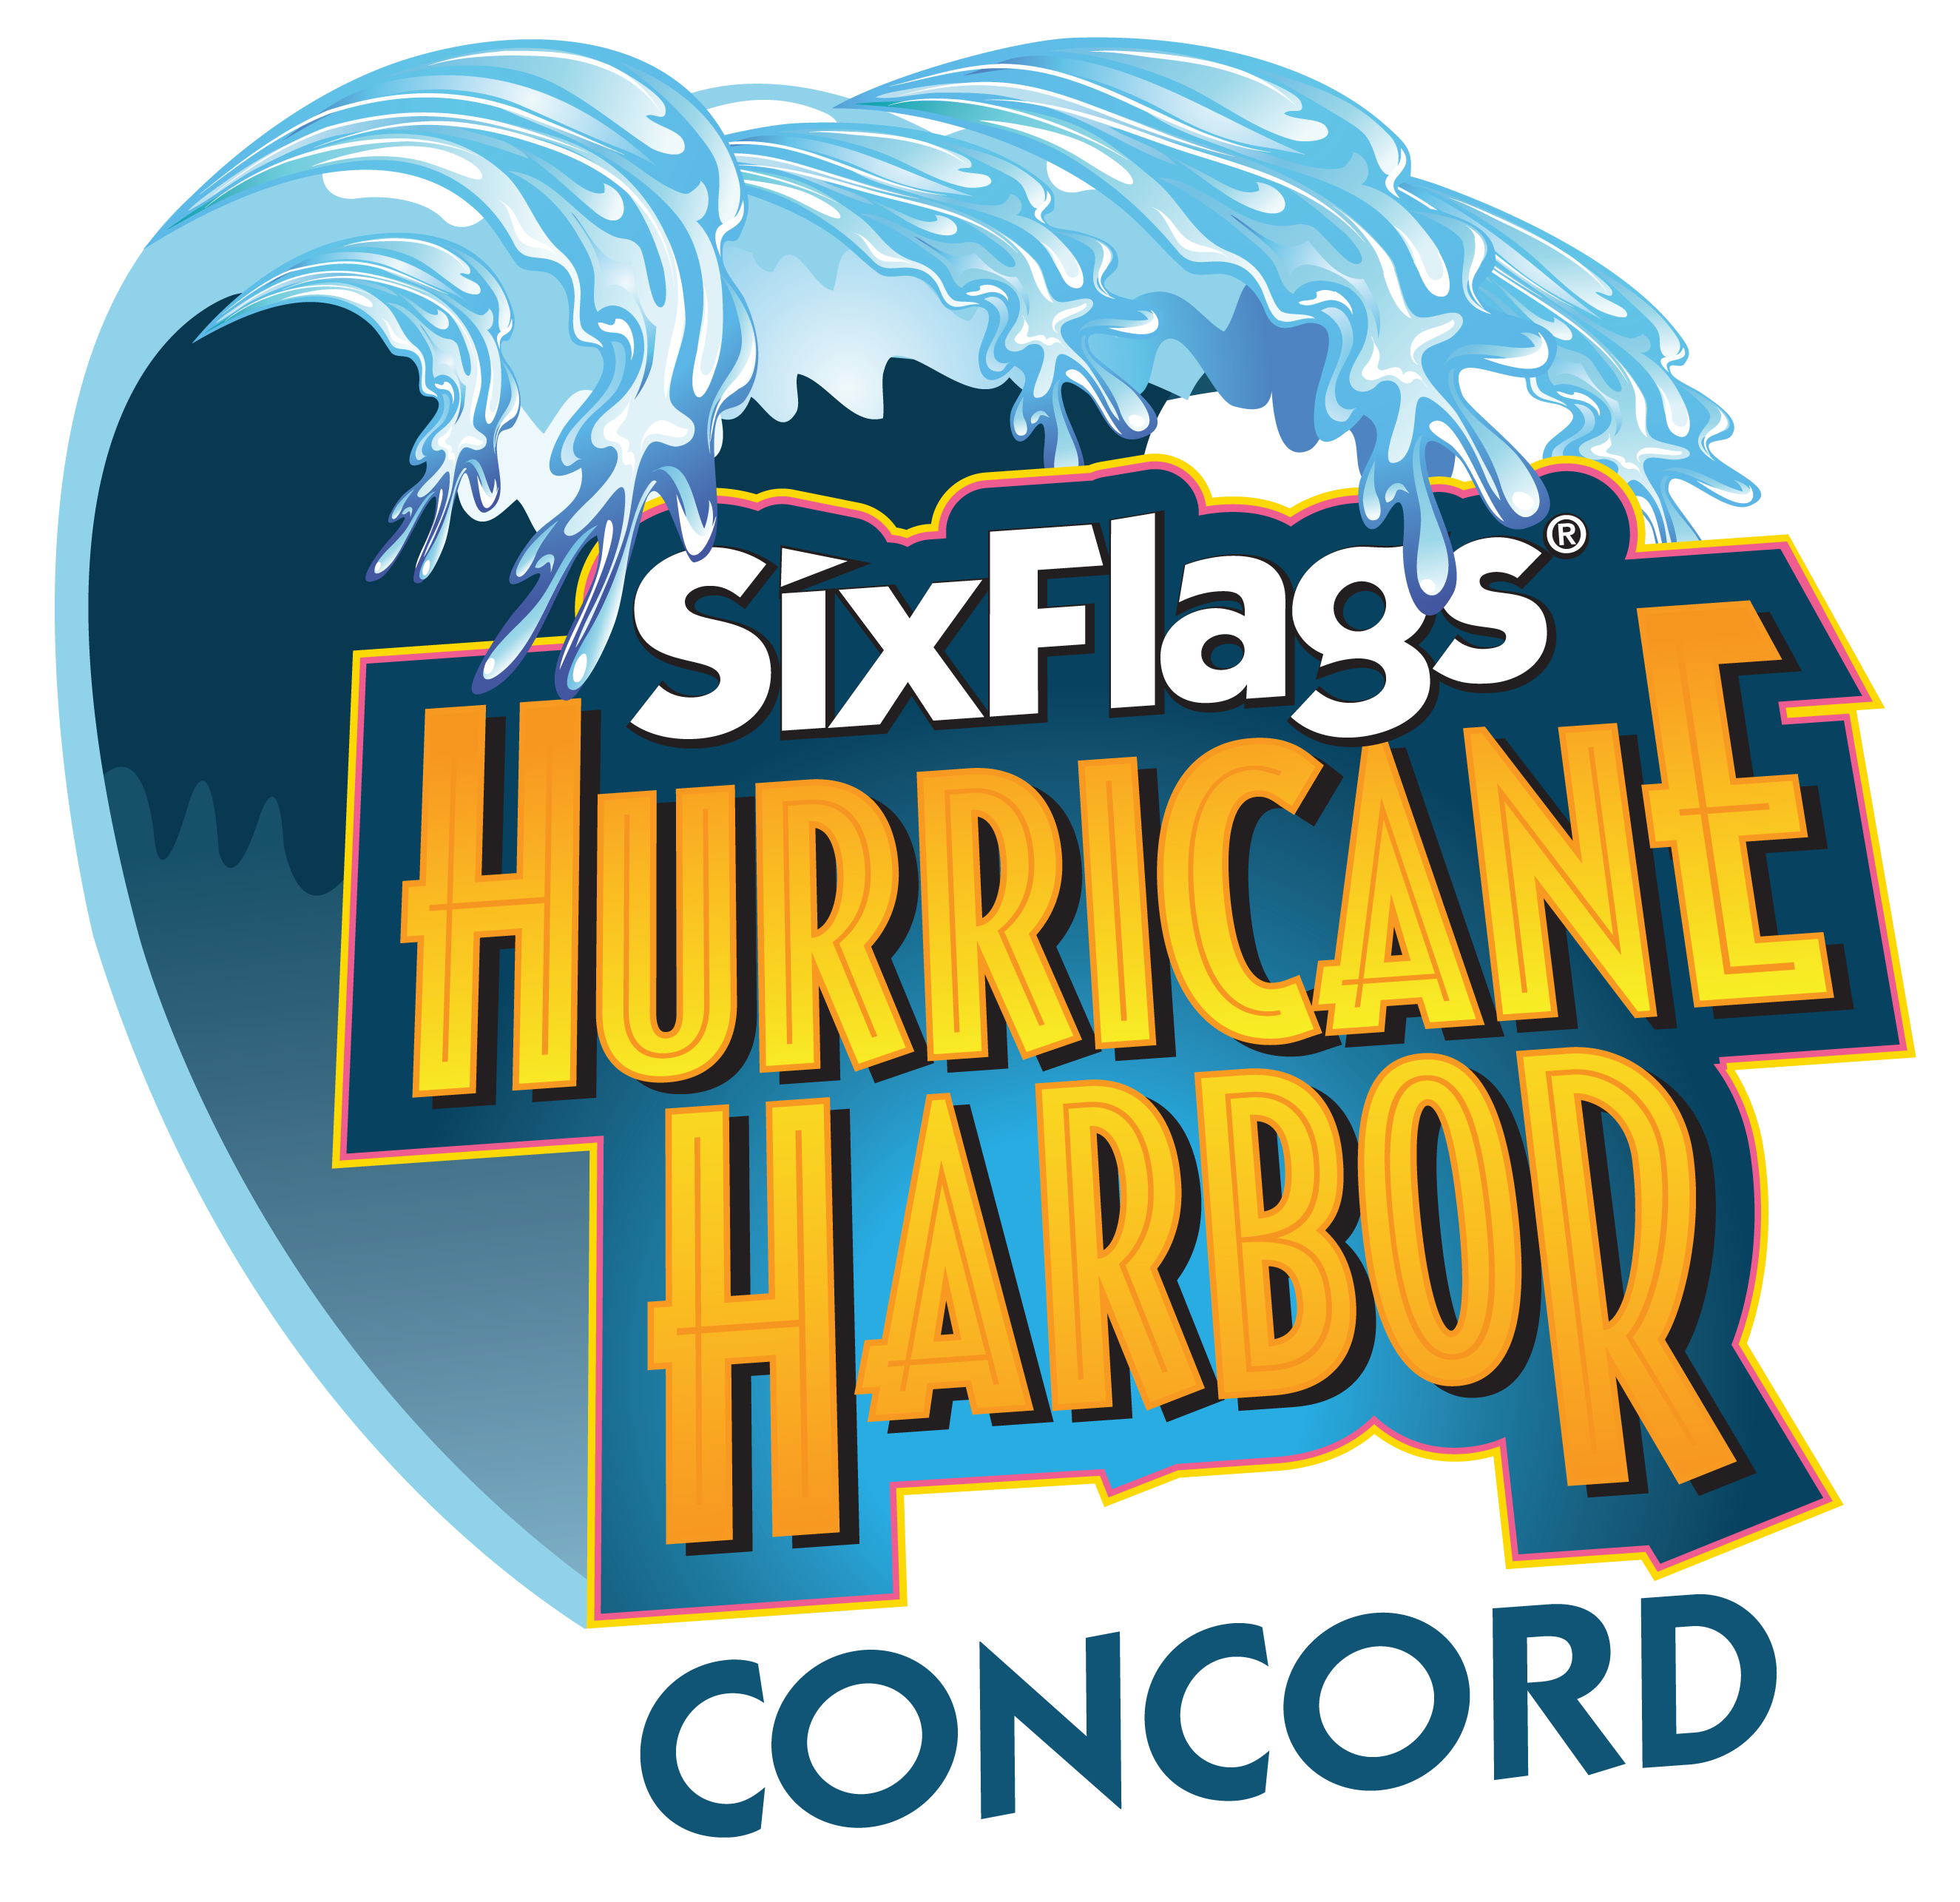 NEW Six Flags Hurricane Harbor Concord! Coaster Kings